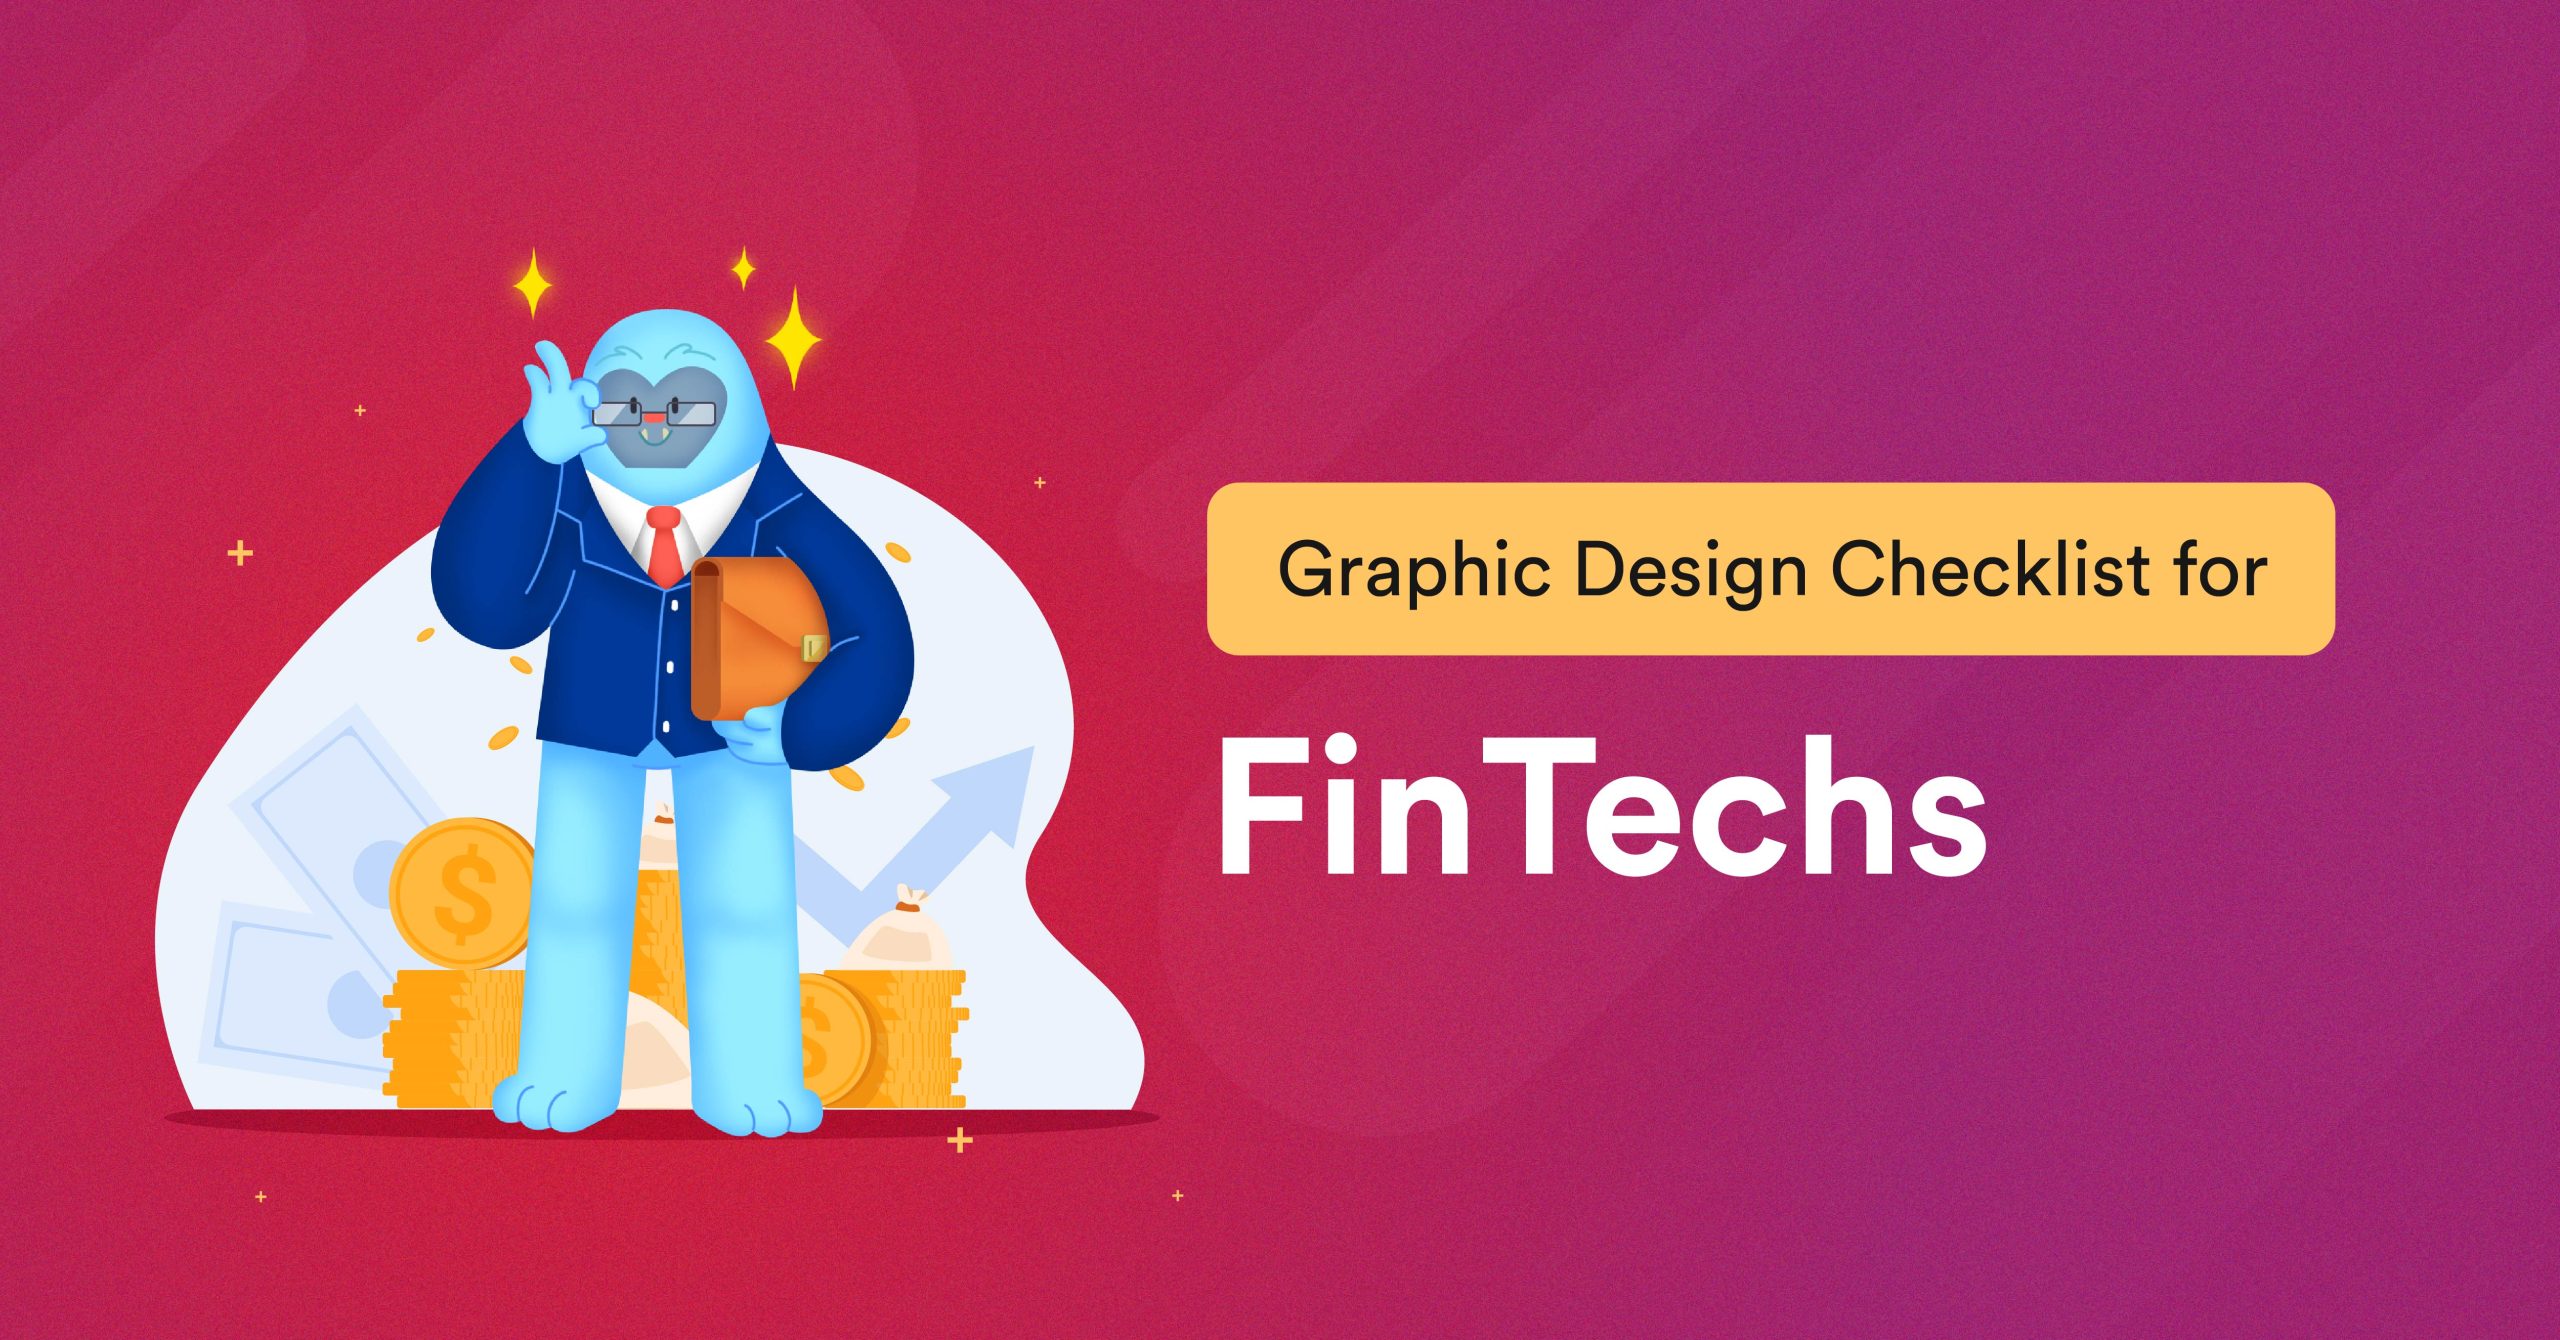 Graphic Design Checklist for Fintech Companies